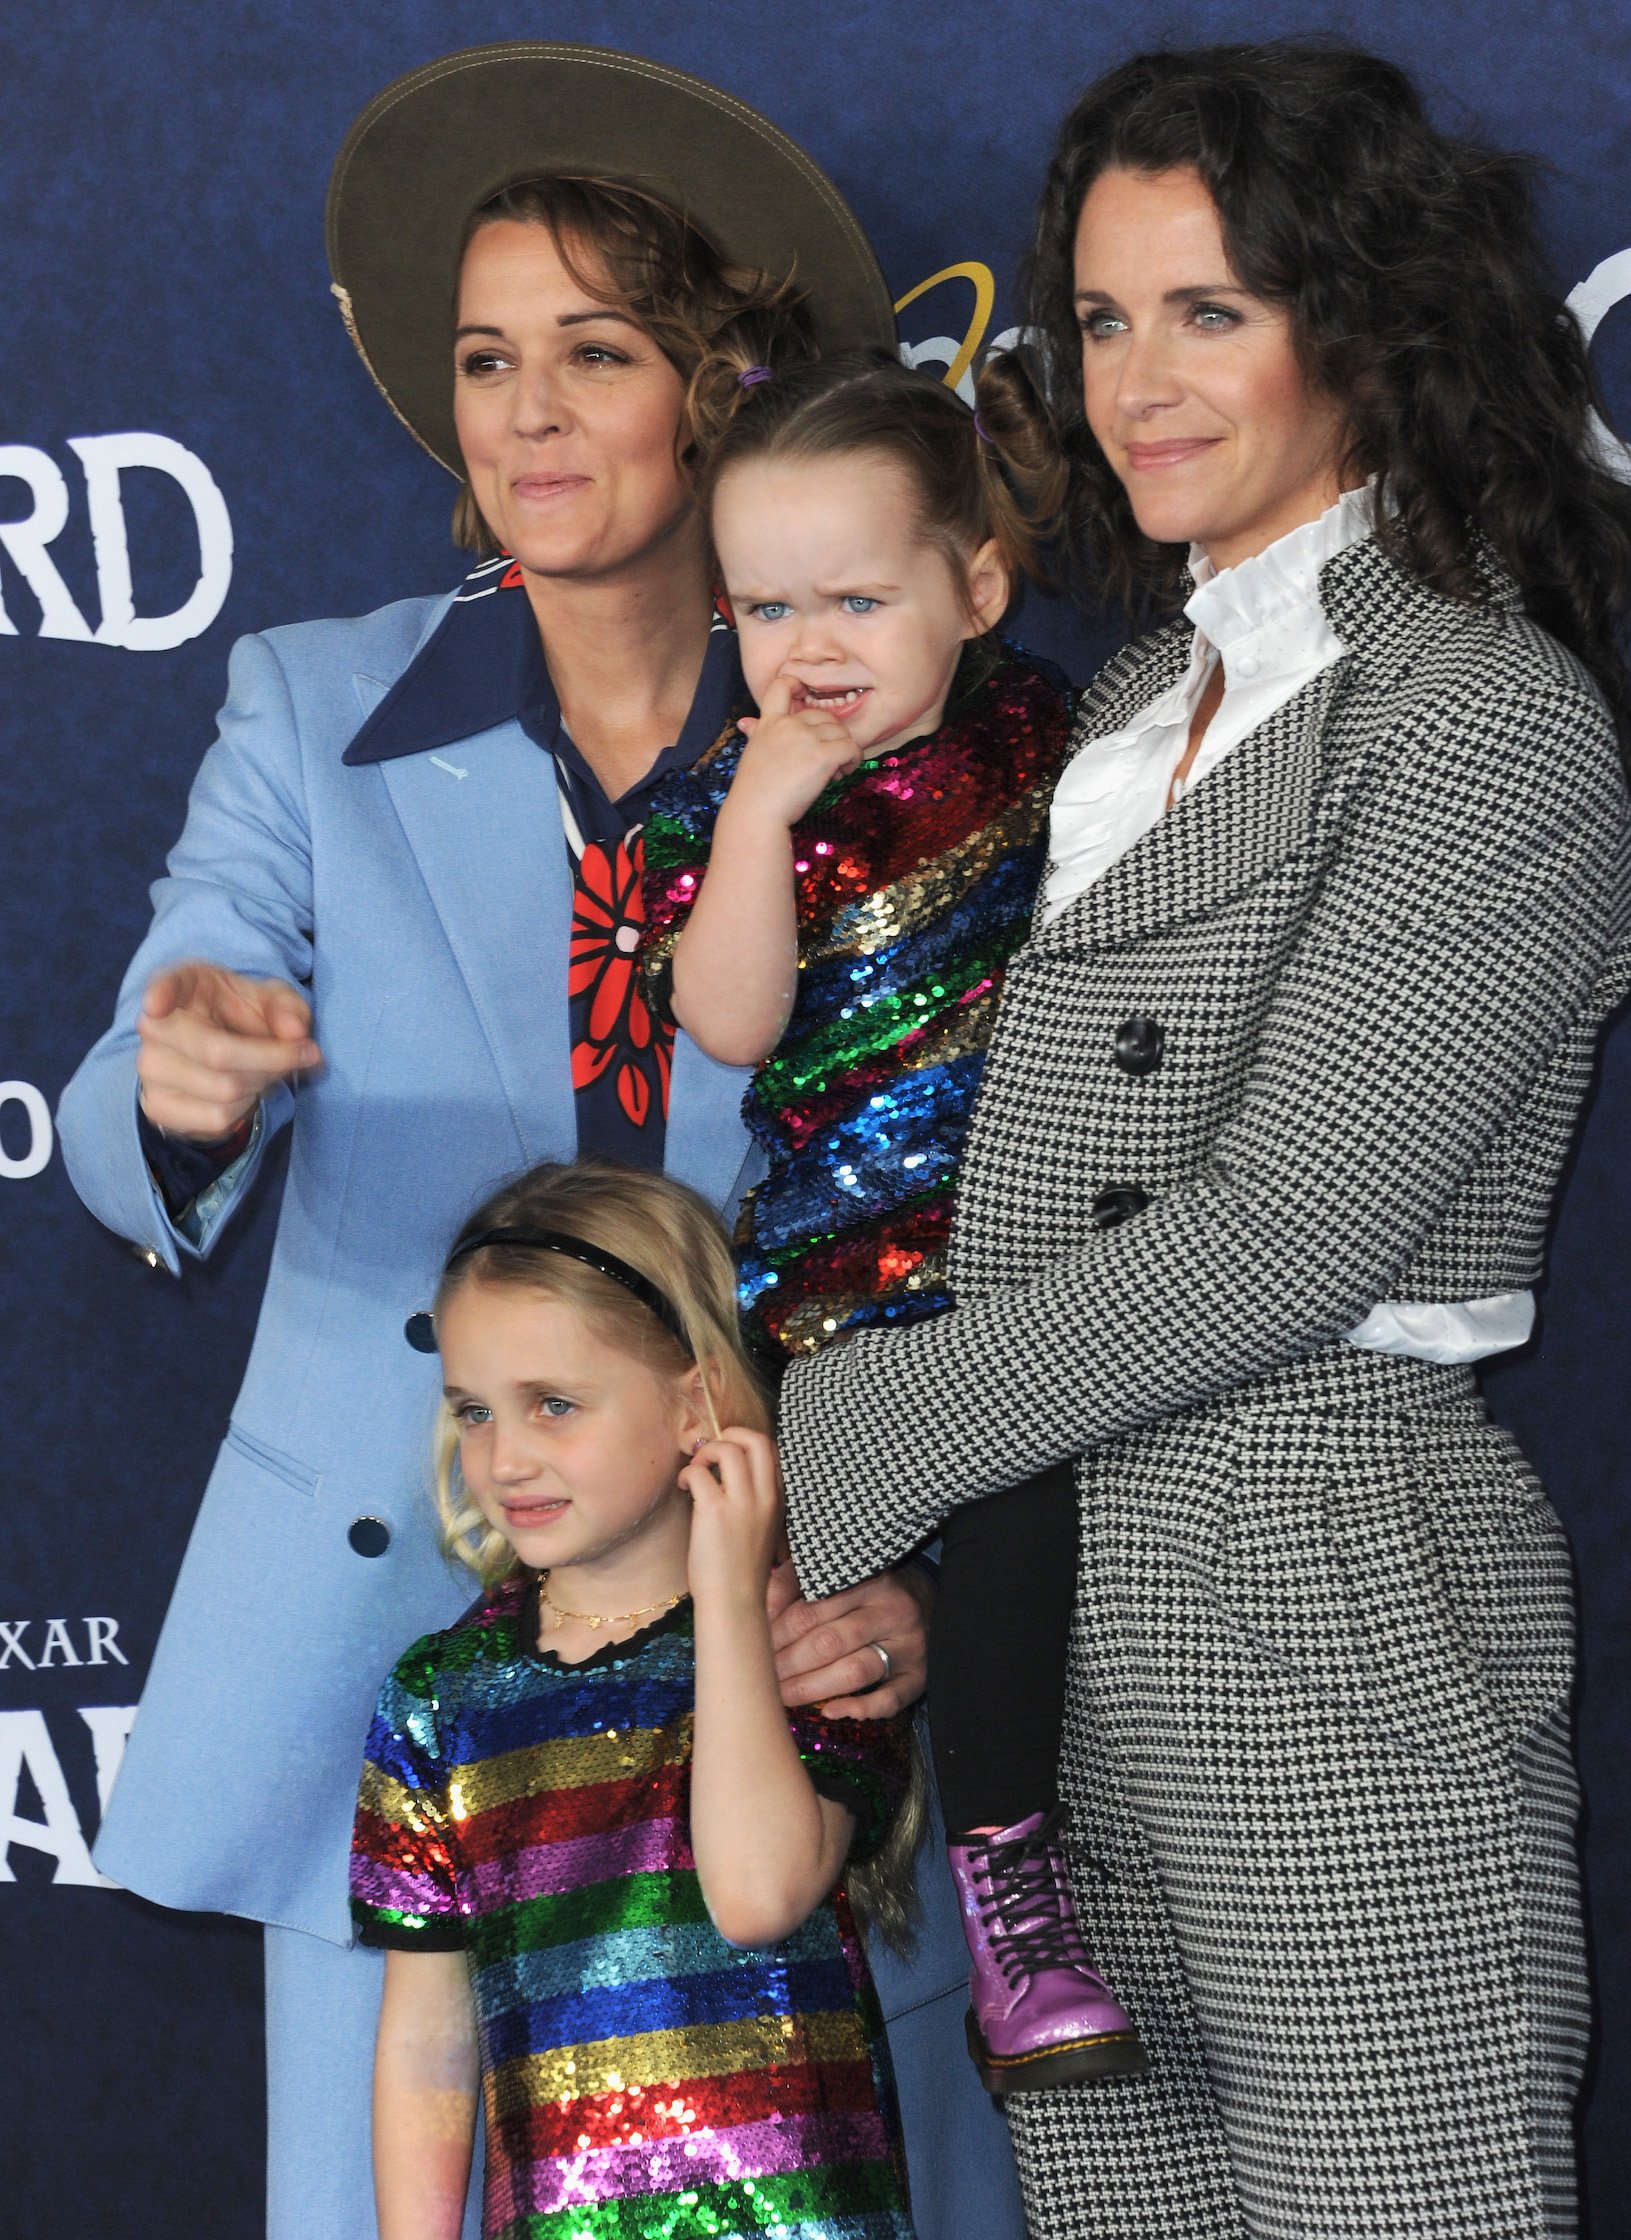 Brandi Carlile, Catherine Shepherd, and their children arriving at a Disney premiere